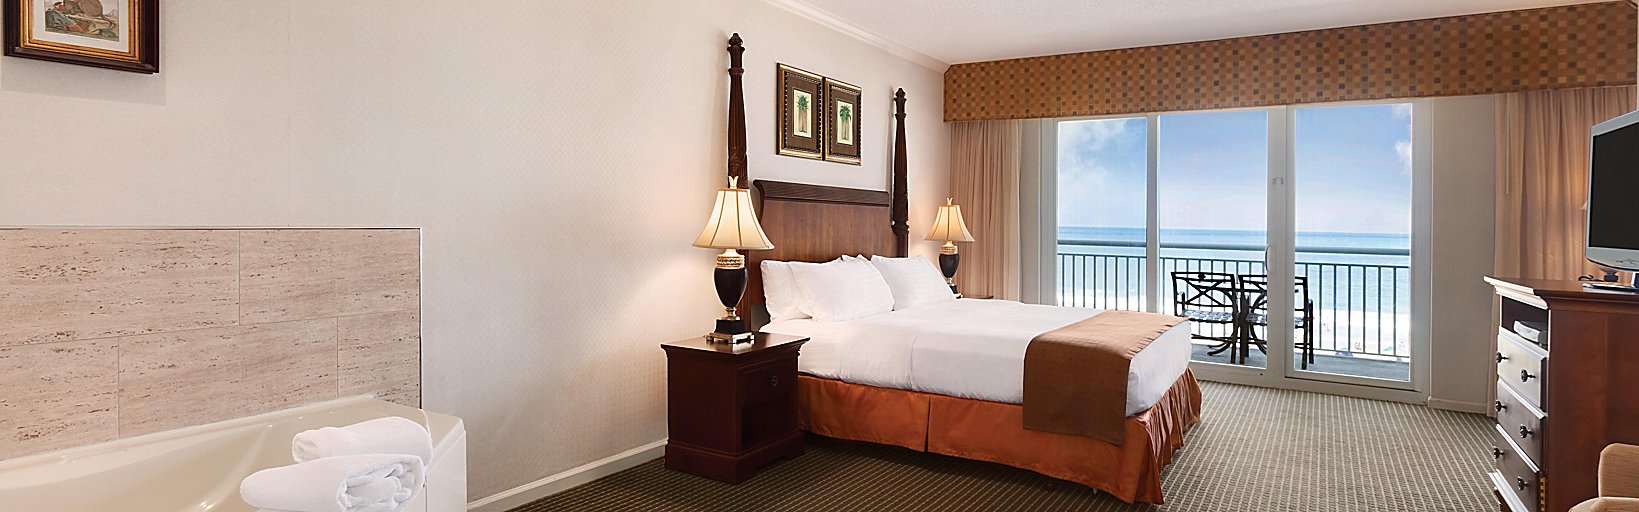 Holiday Inn Ocean City Hotels Holiday Inn Hotel Suites